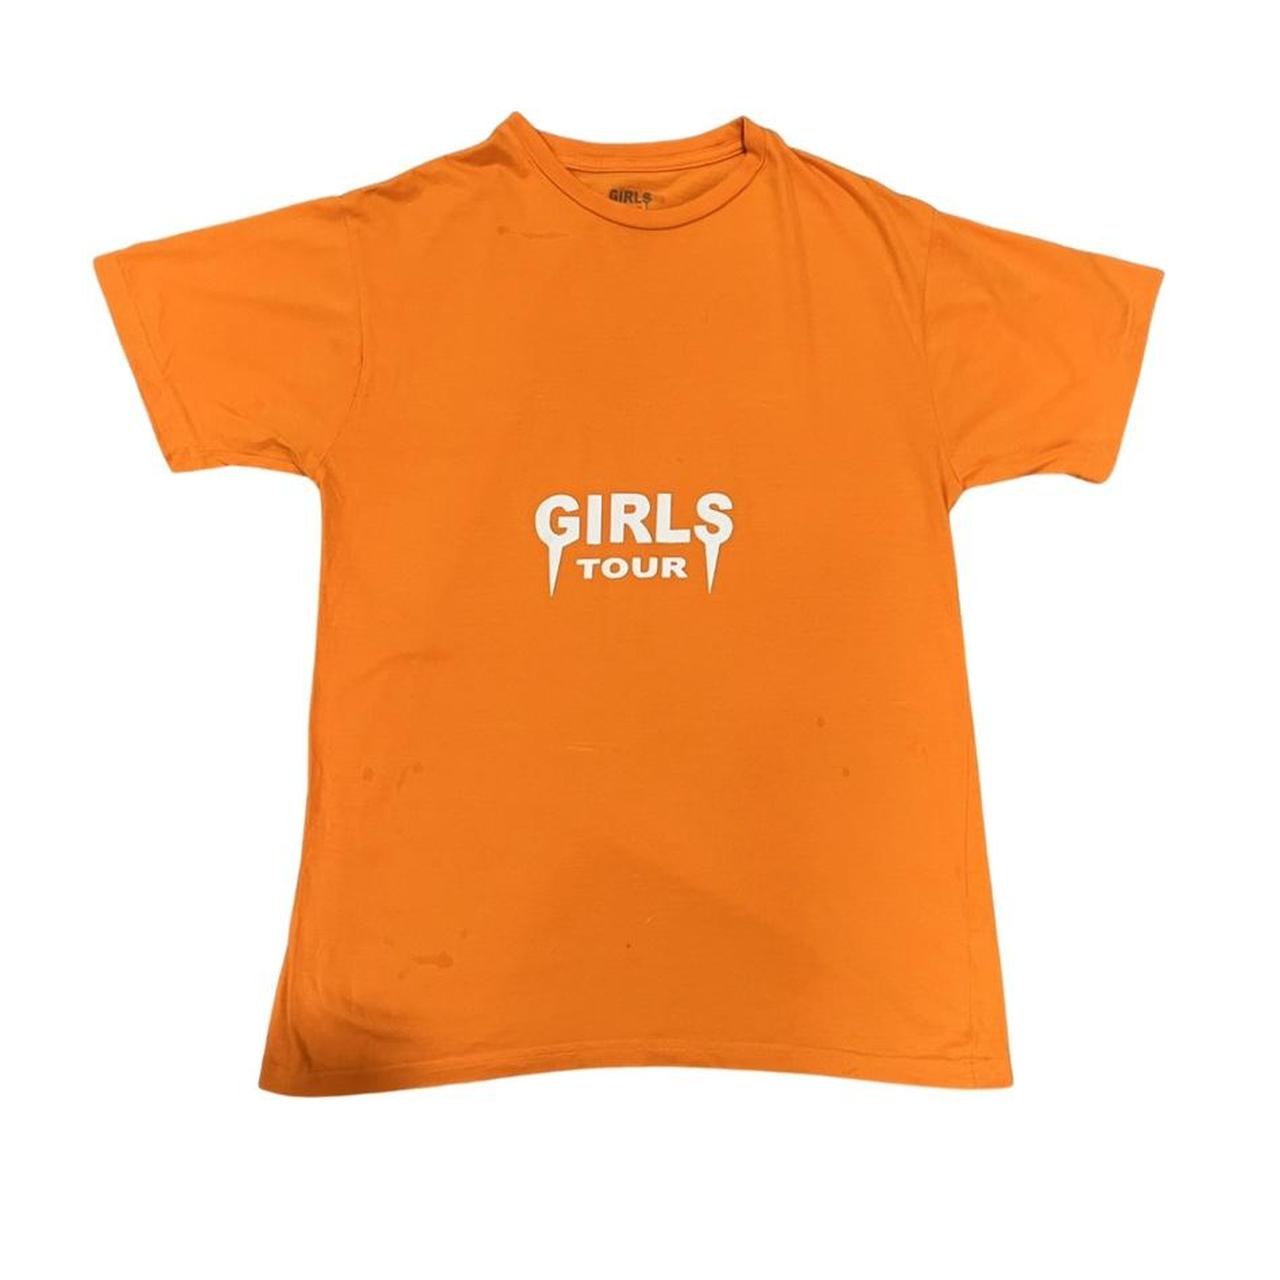 Girls Tour Women's Orange T-shirt